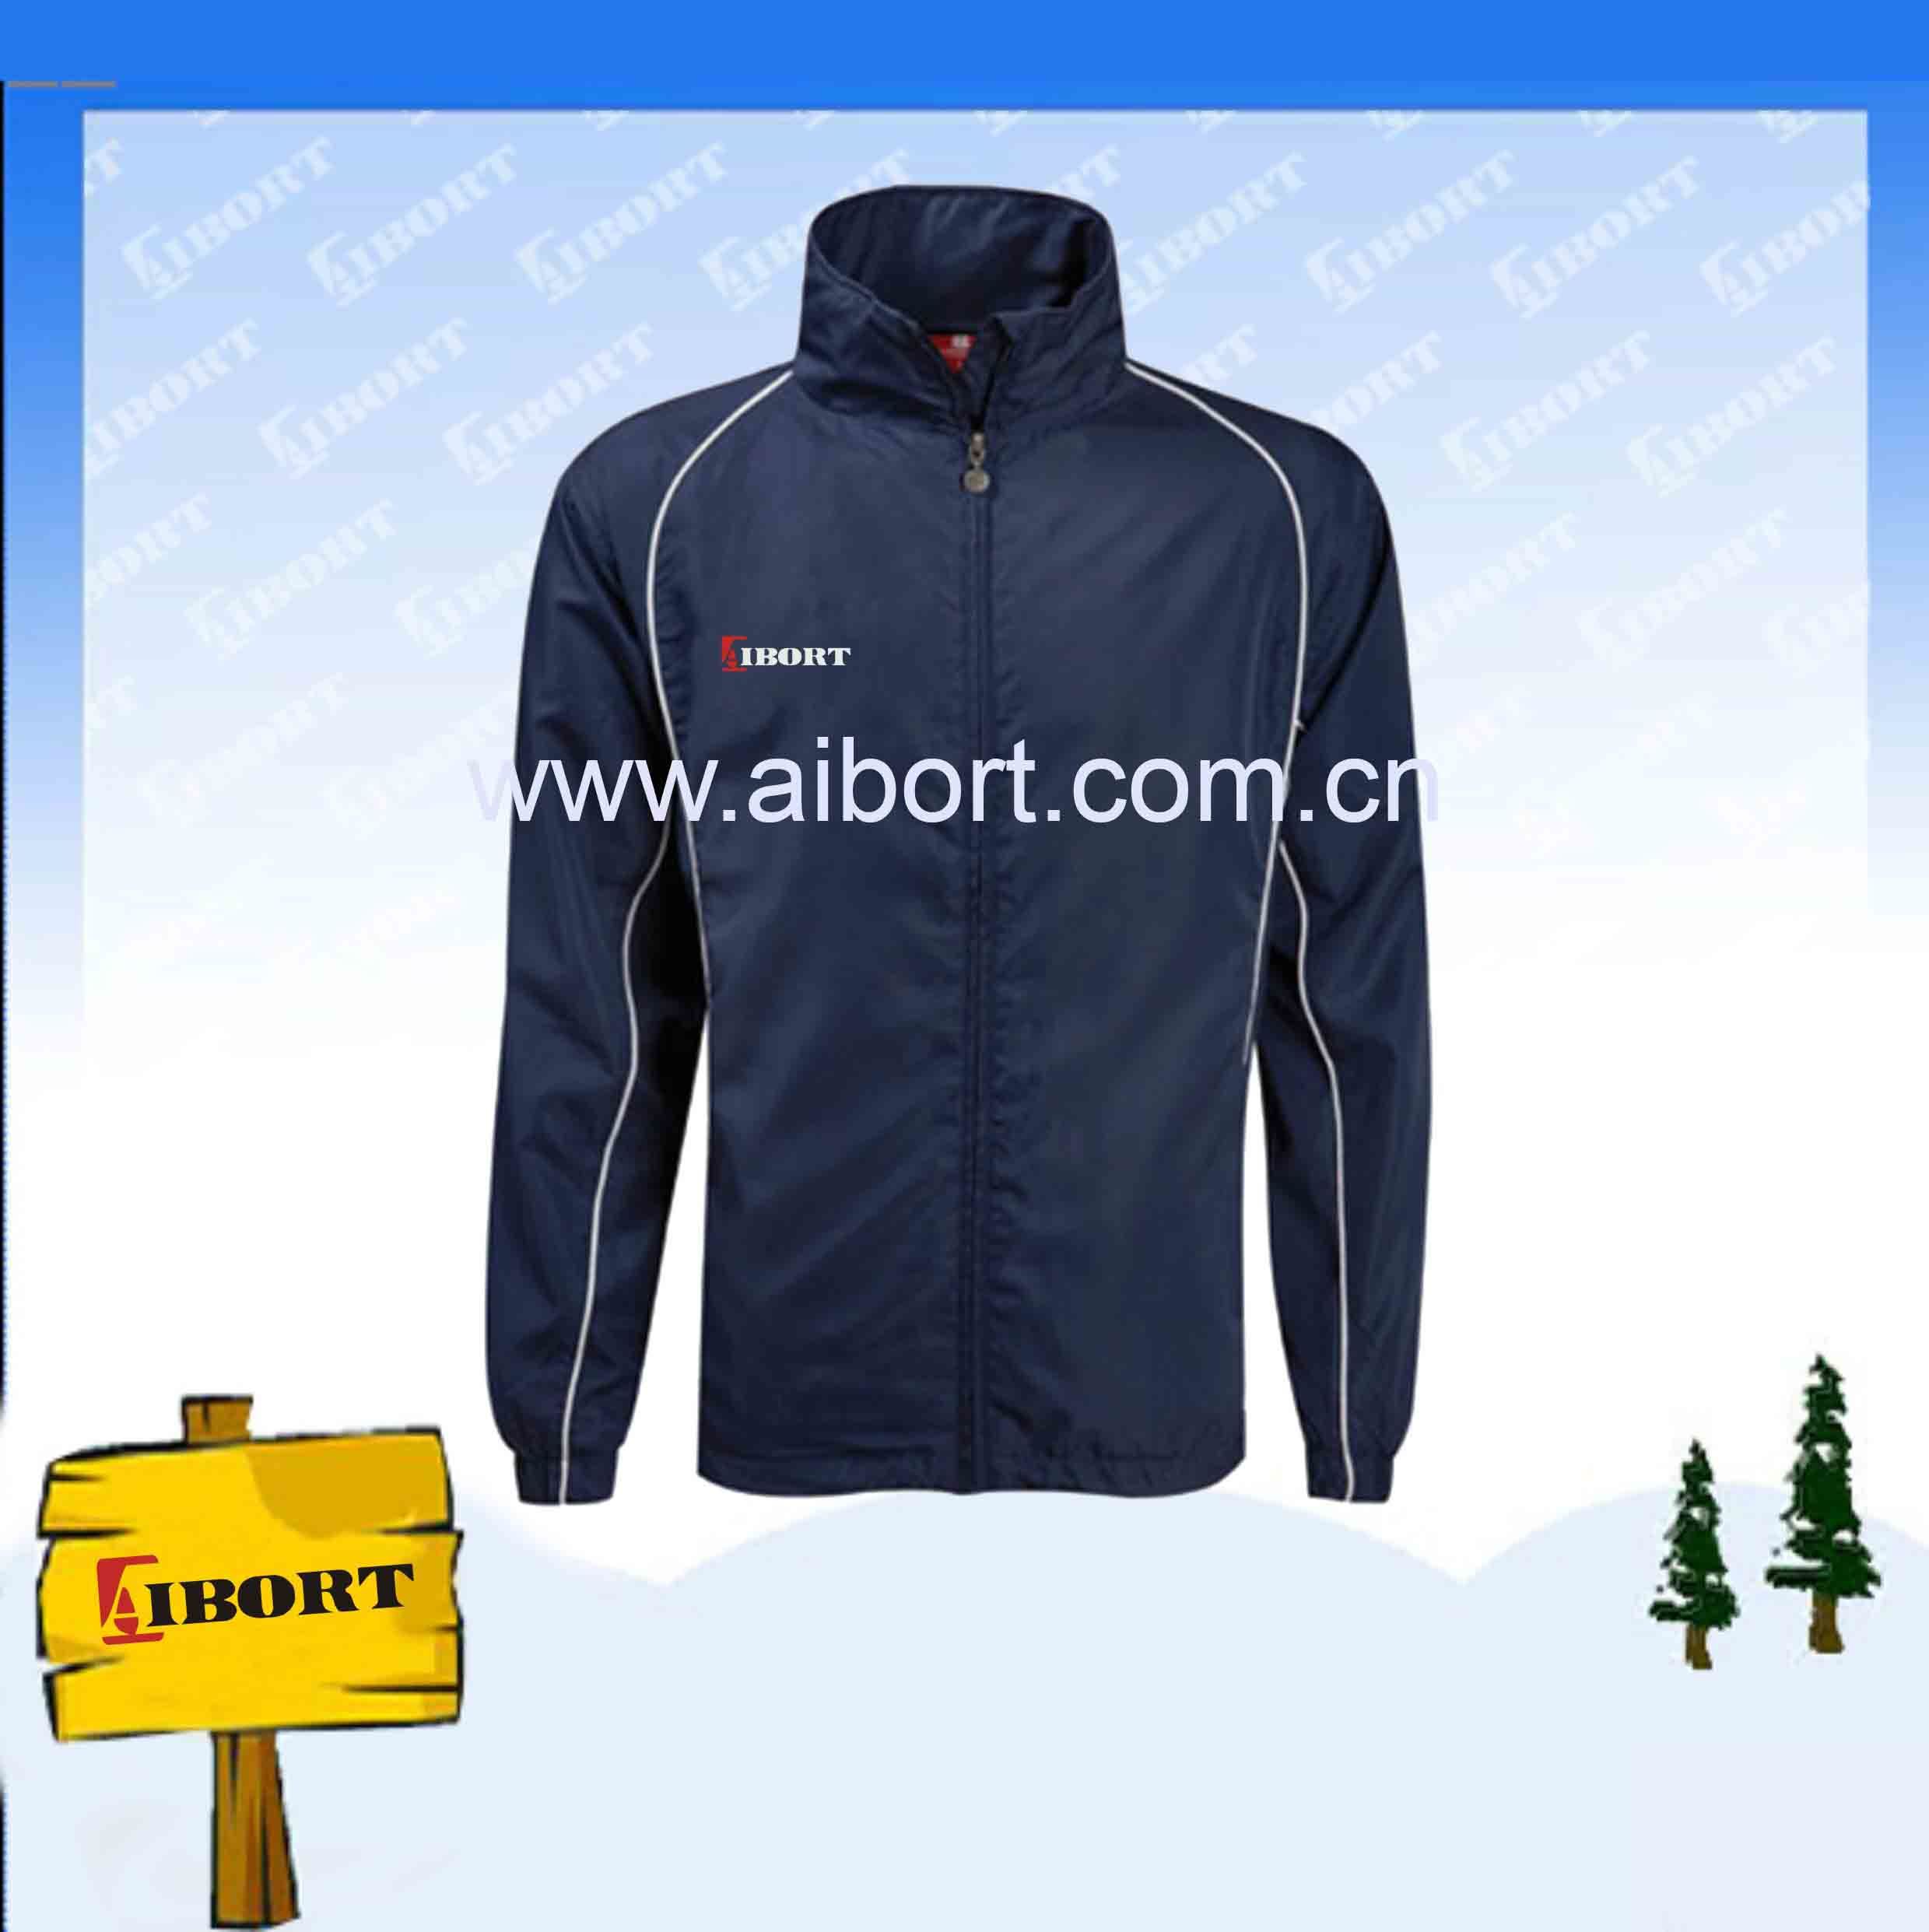 Microfibre Men's Tracksuit Sports Wear Jacket (SSA-01)